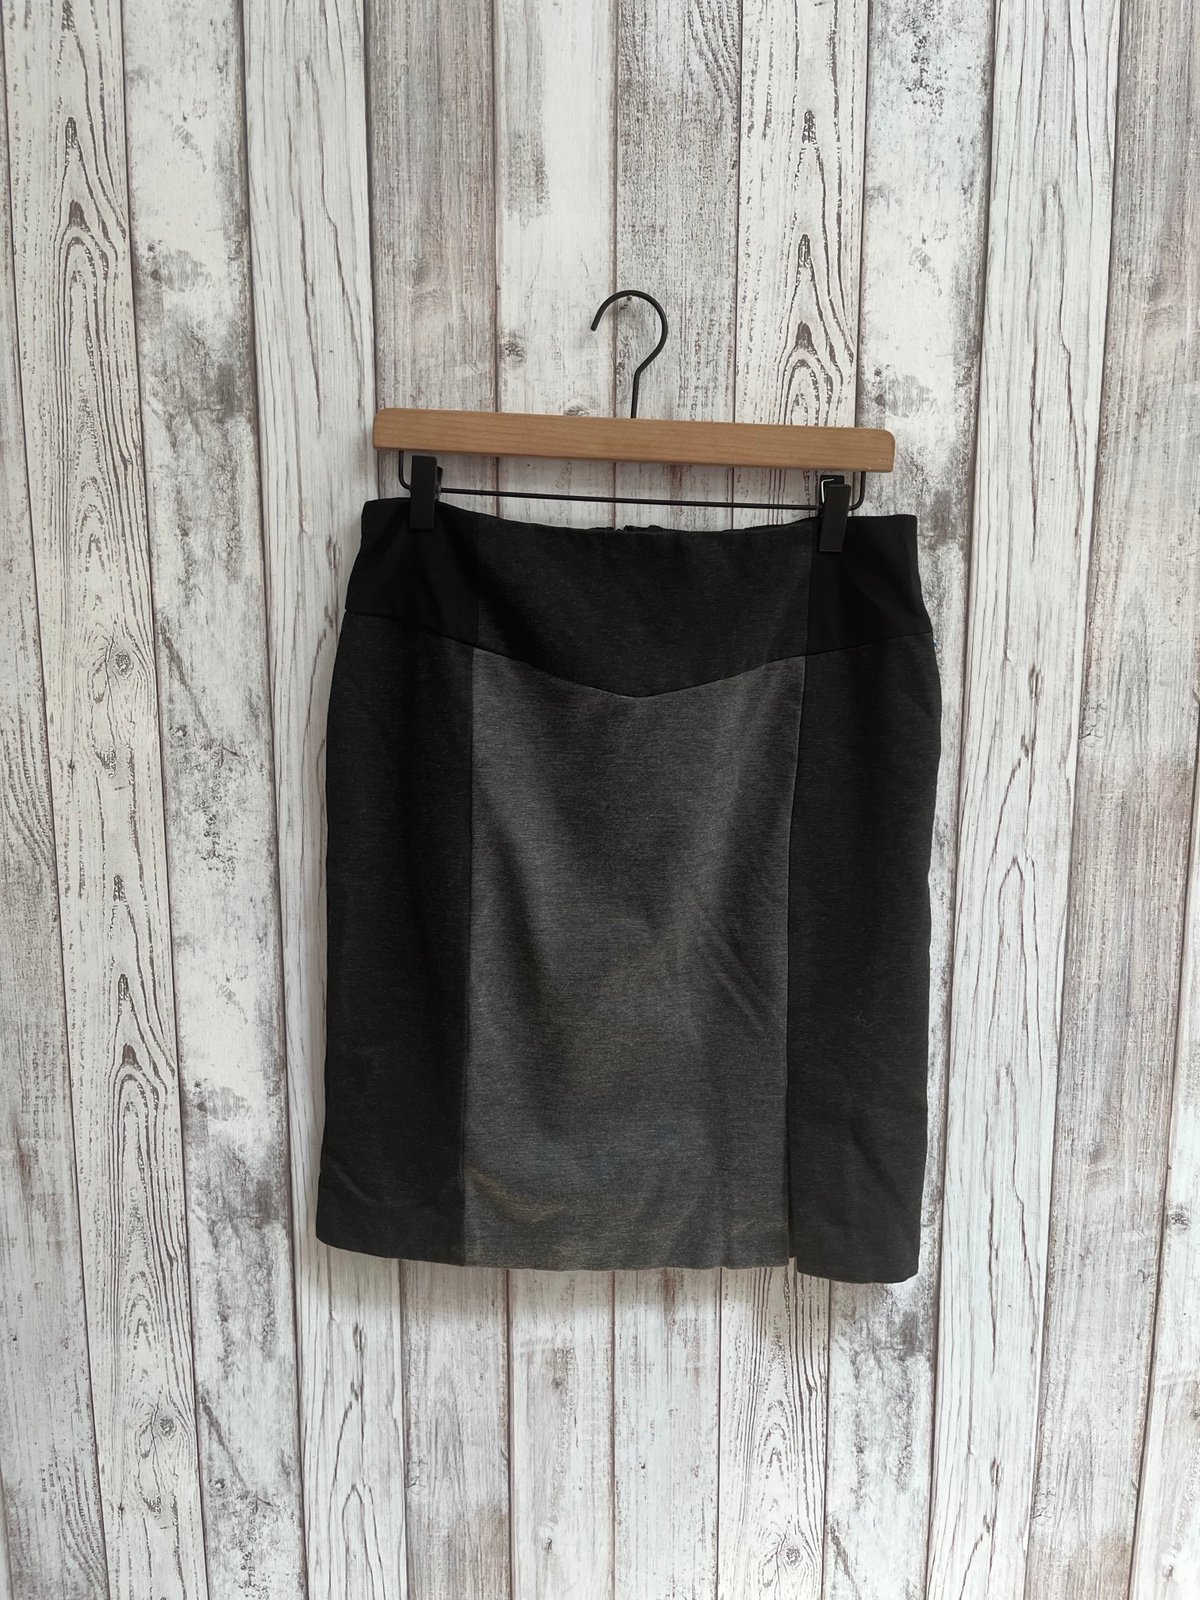 Affordable Halogen black/gray pencil skirt size 10 OMIz